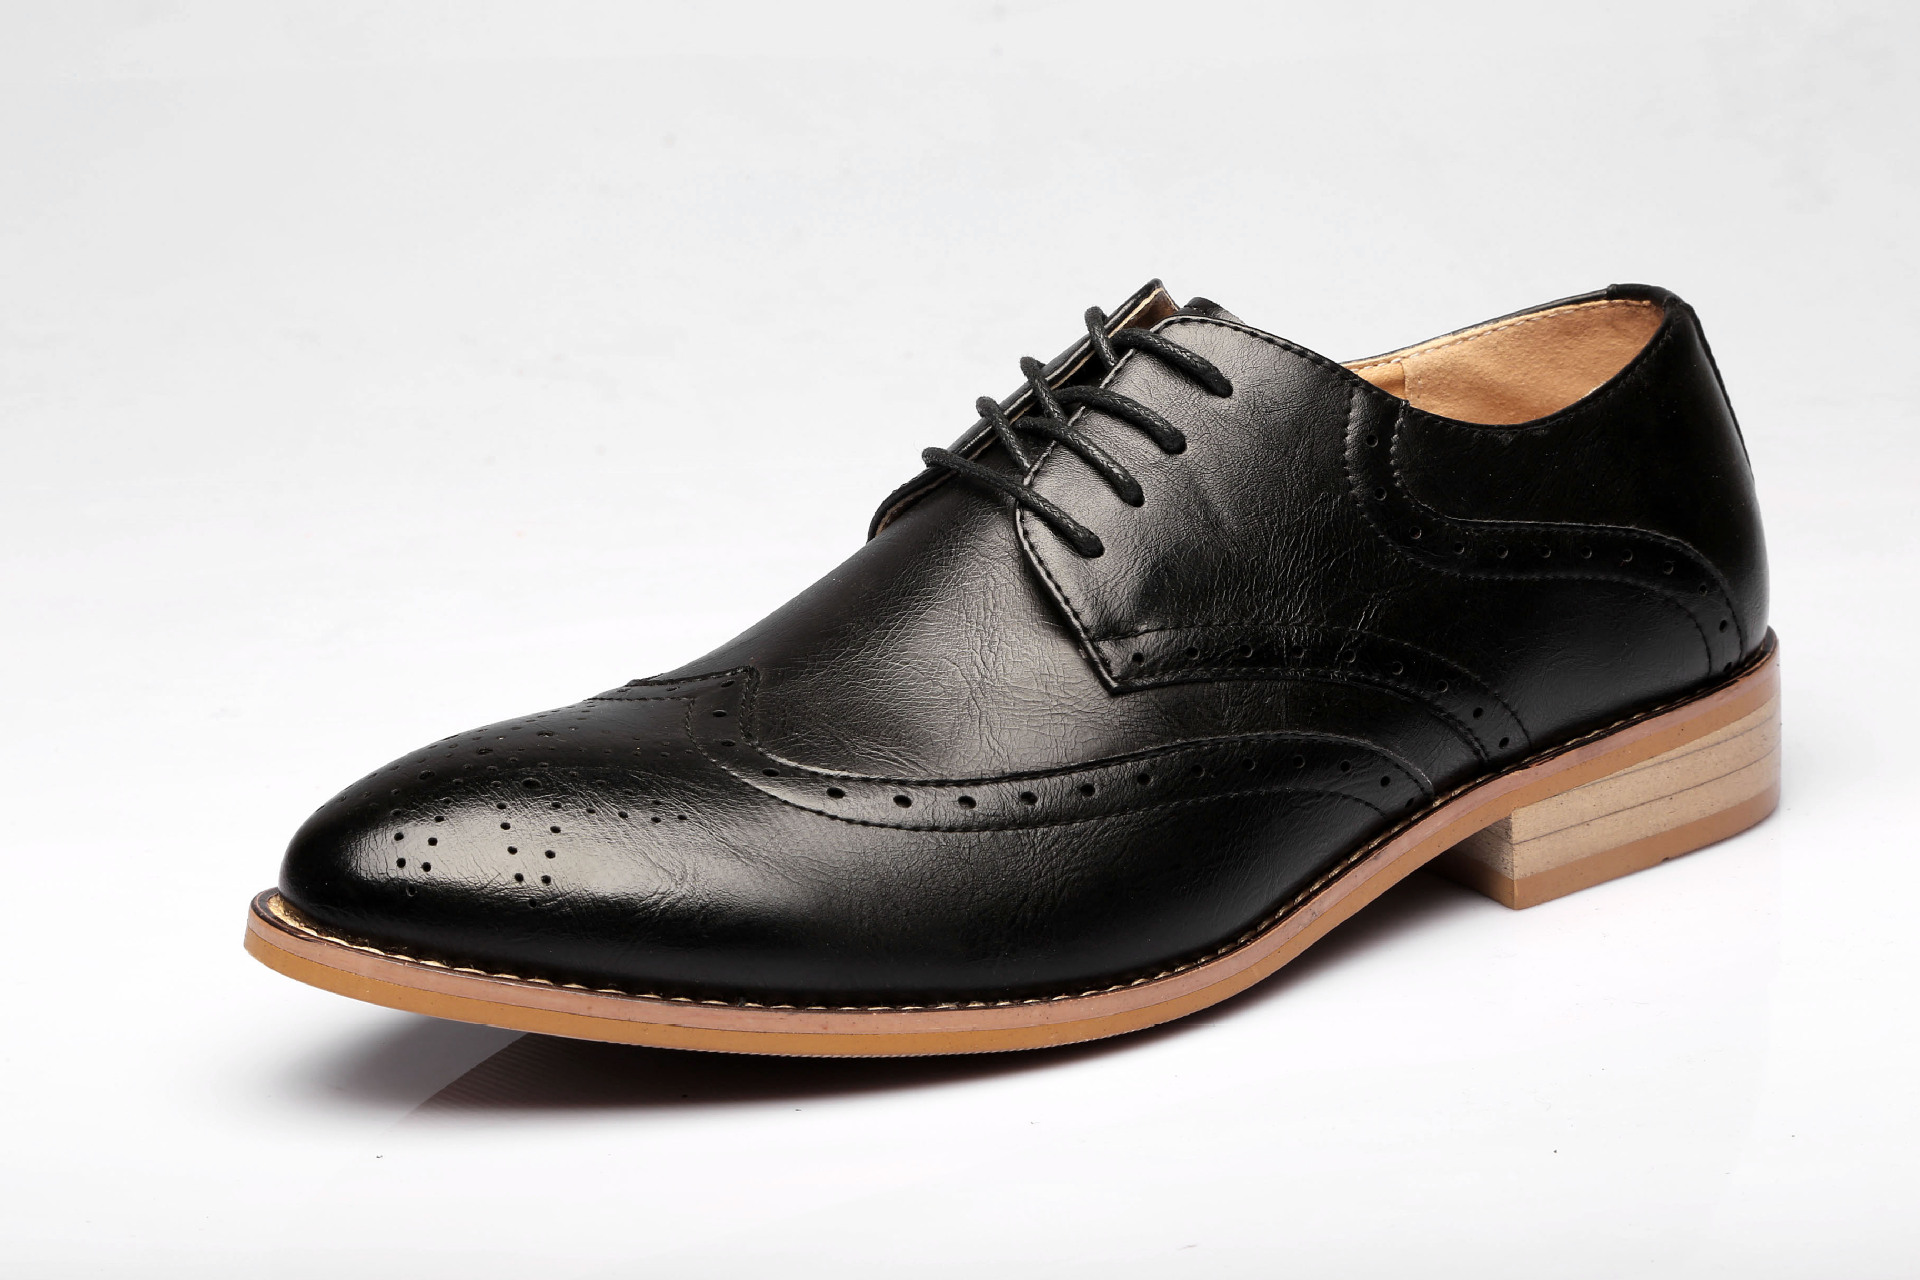 Chaussures homme en cuir véritable - Ref 3445714 Image 10